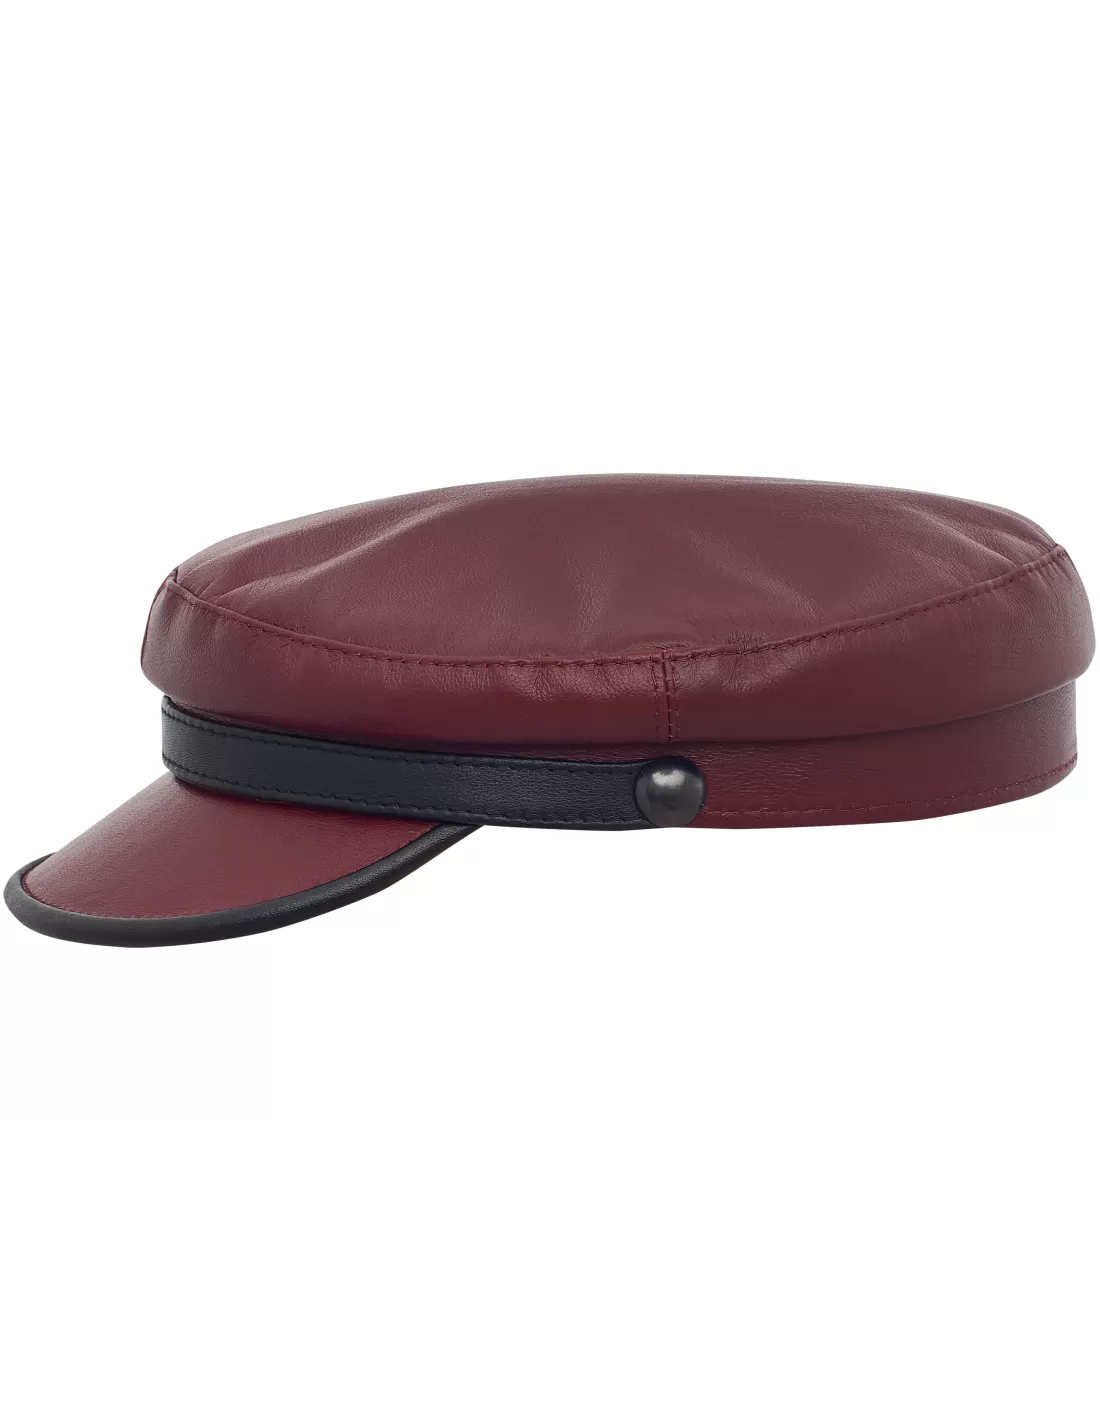 https://sterkowski.com/4575-thickbox_default/trawler-hat-natural-leather.jpg